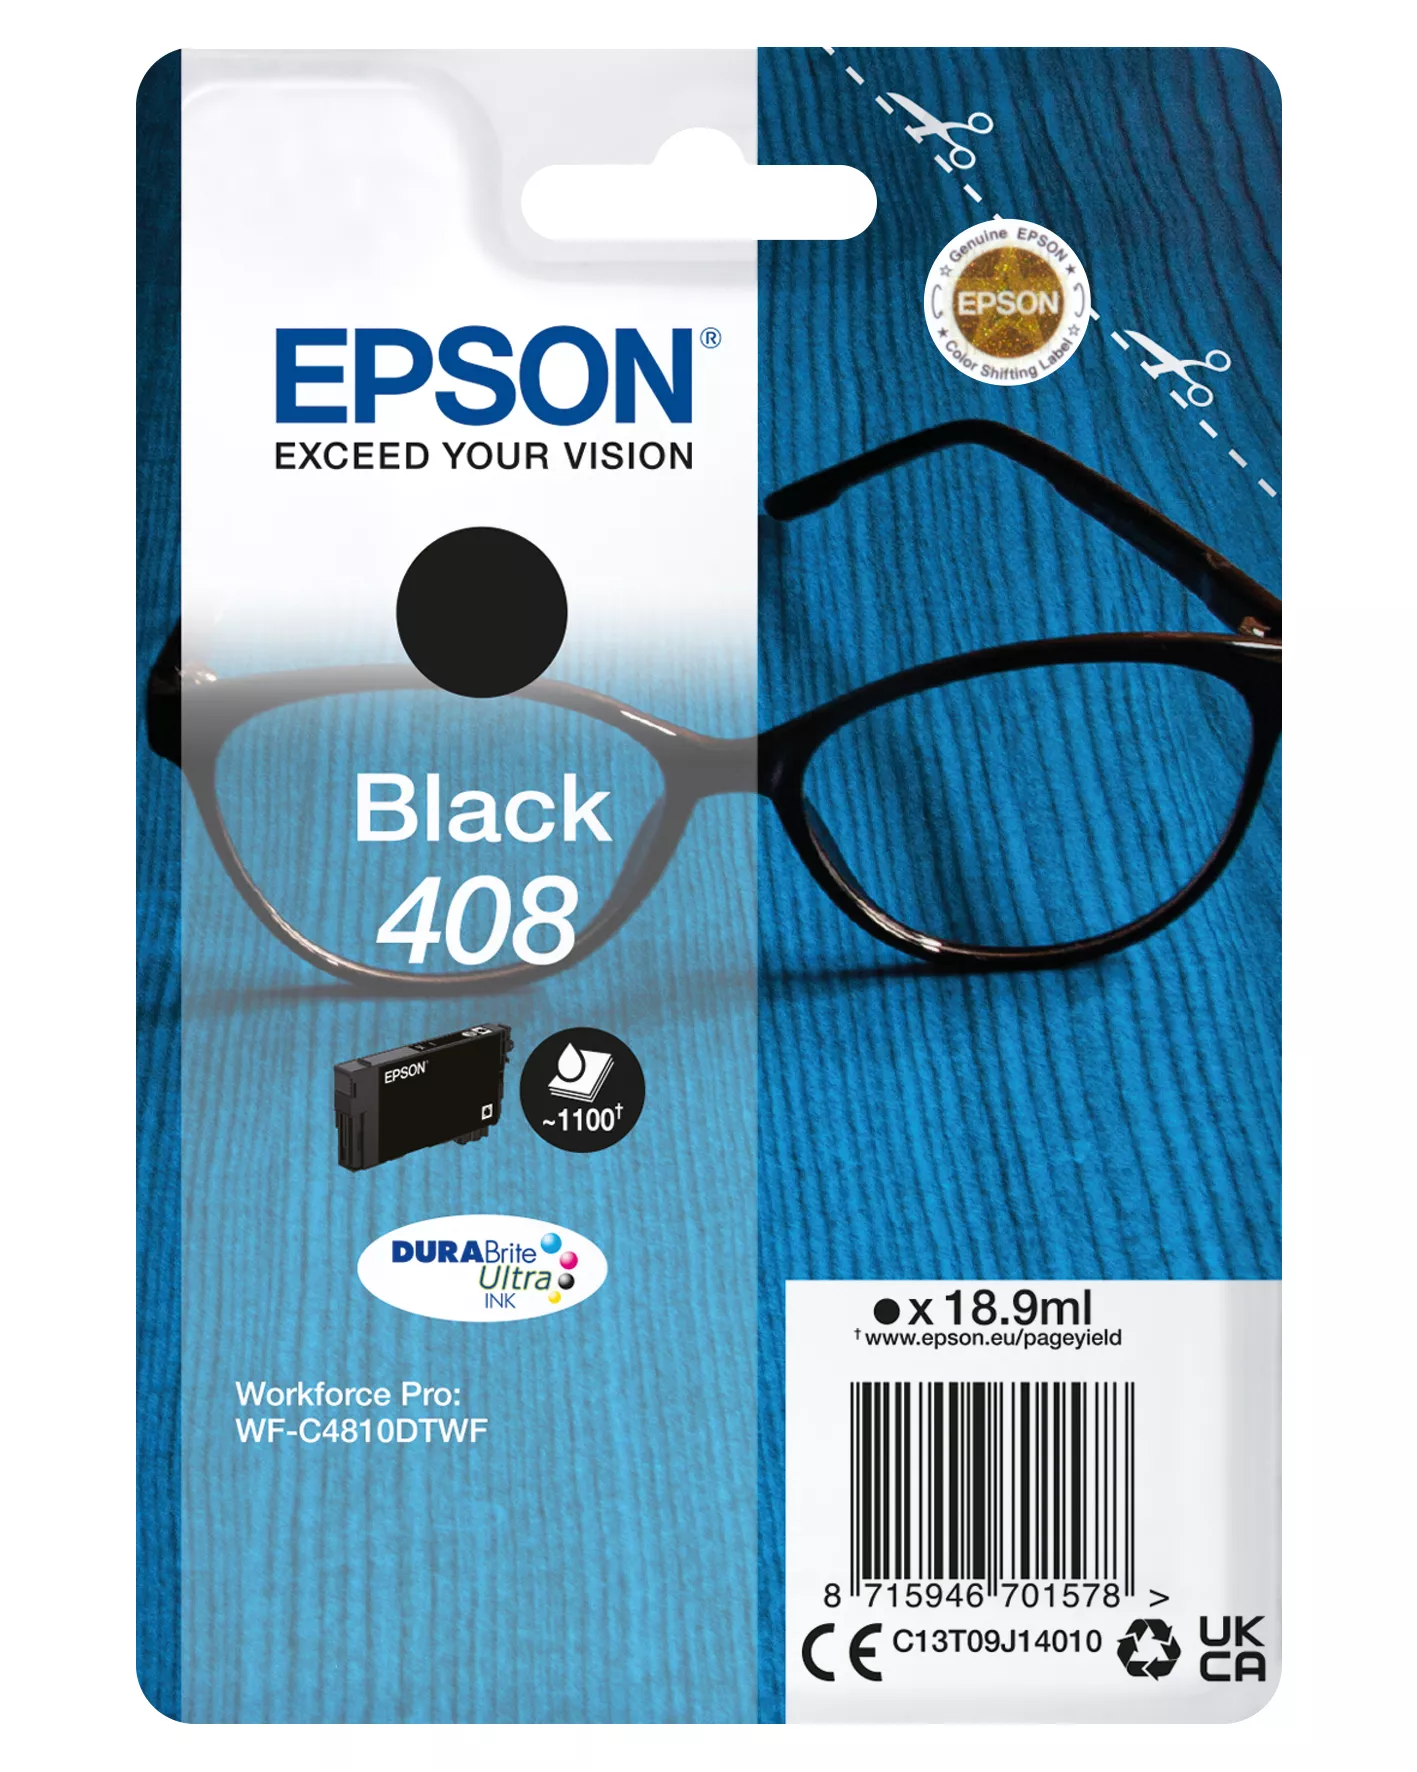 Revendeur officiel EPSON Singlepack Black 408 DURABrite Ultra Ink